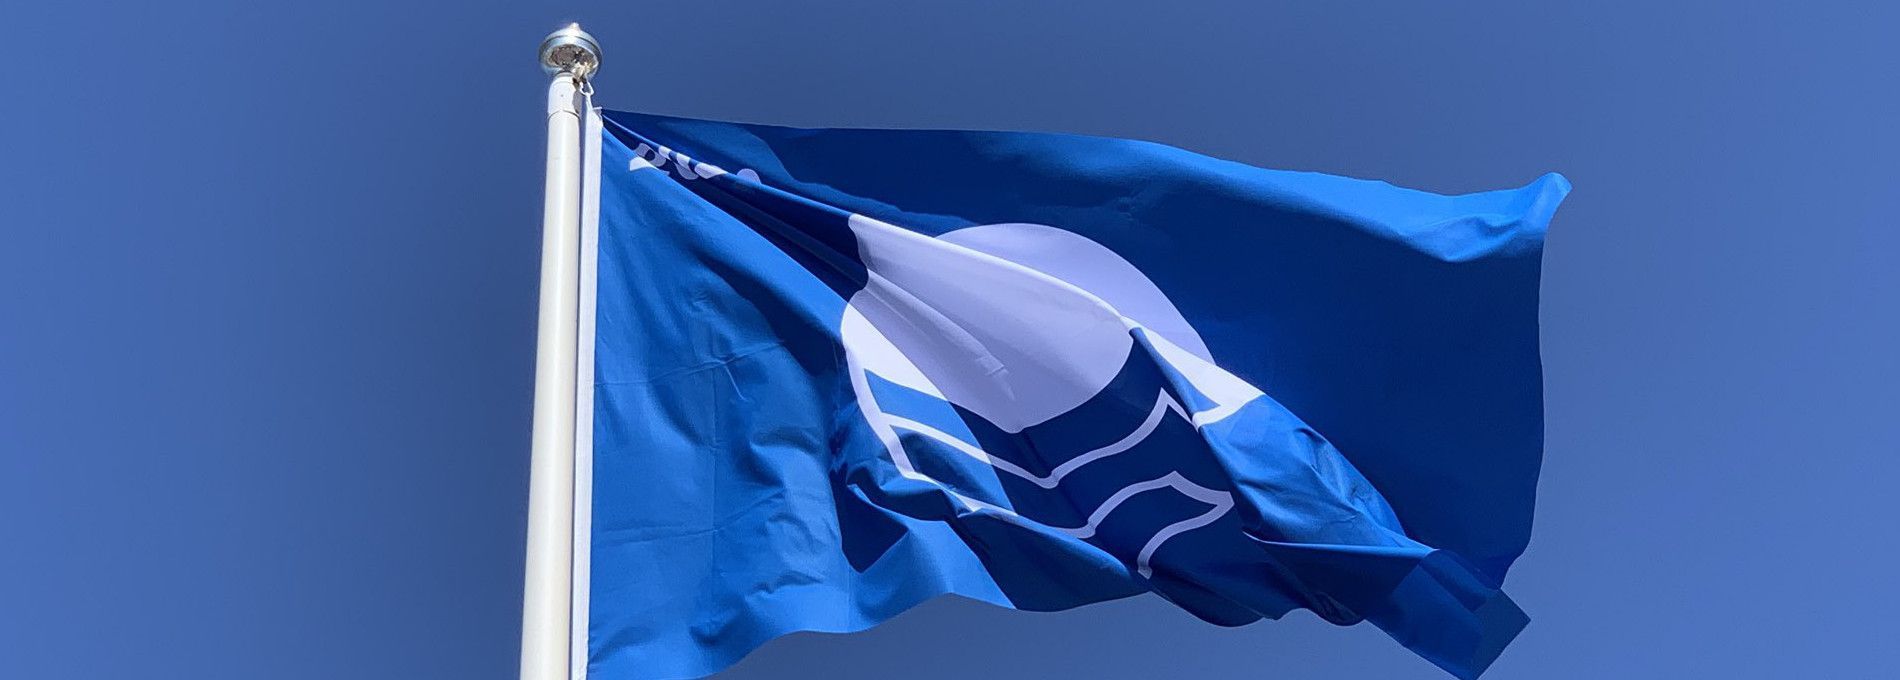 Ameland Blue Flag again! - Tourist Information 